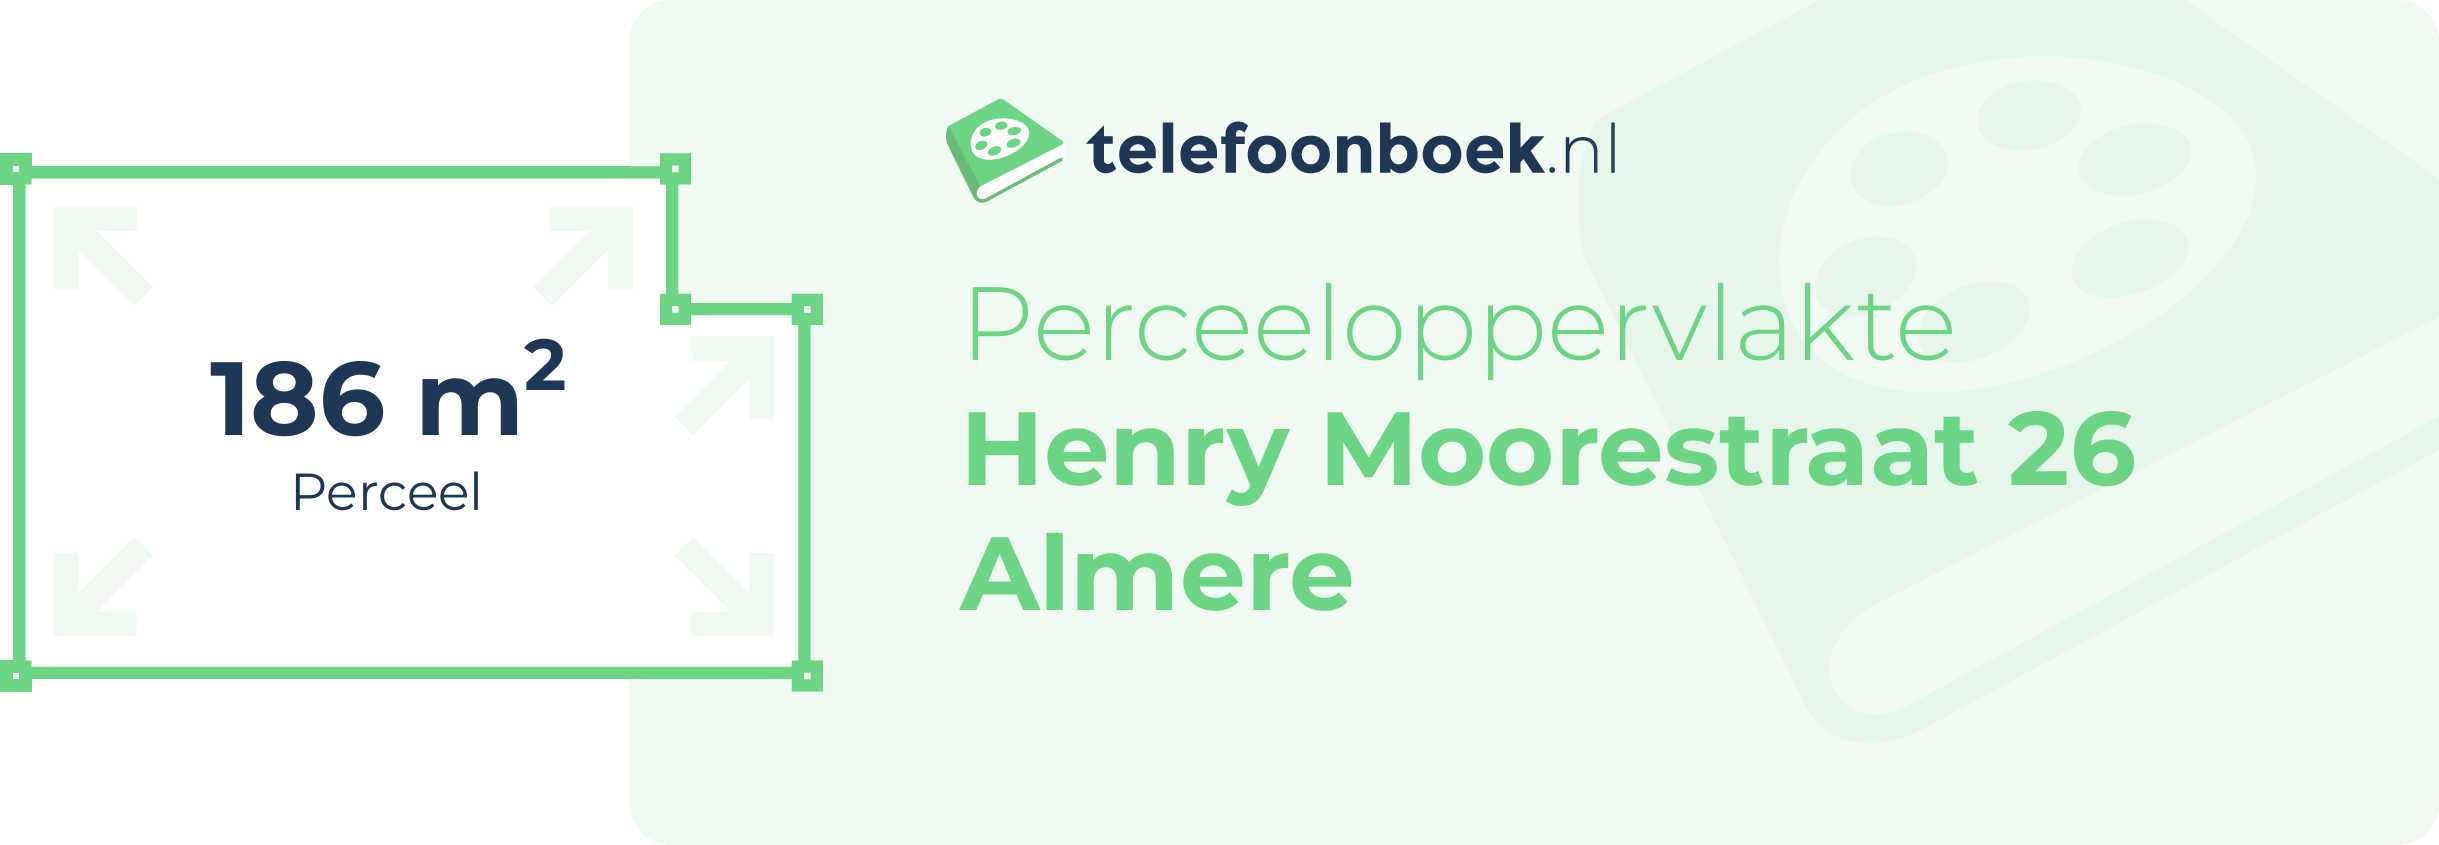 Perceeloppervlakte Henry Moorestraat 26 Almere